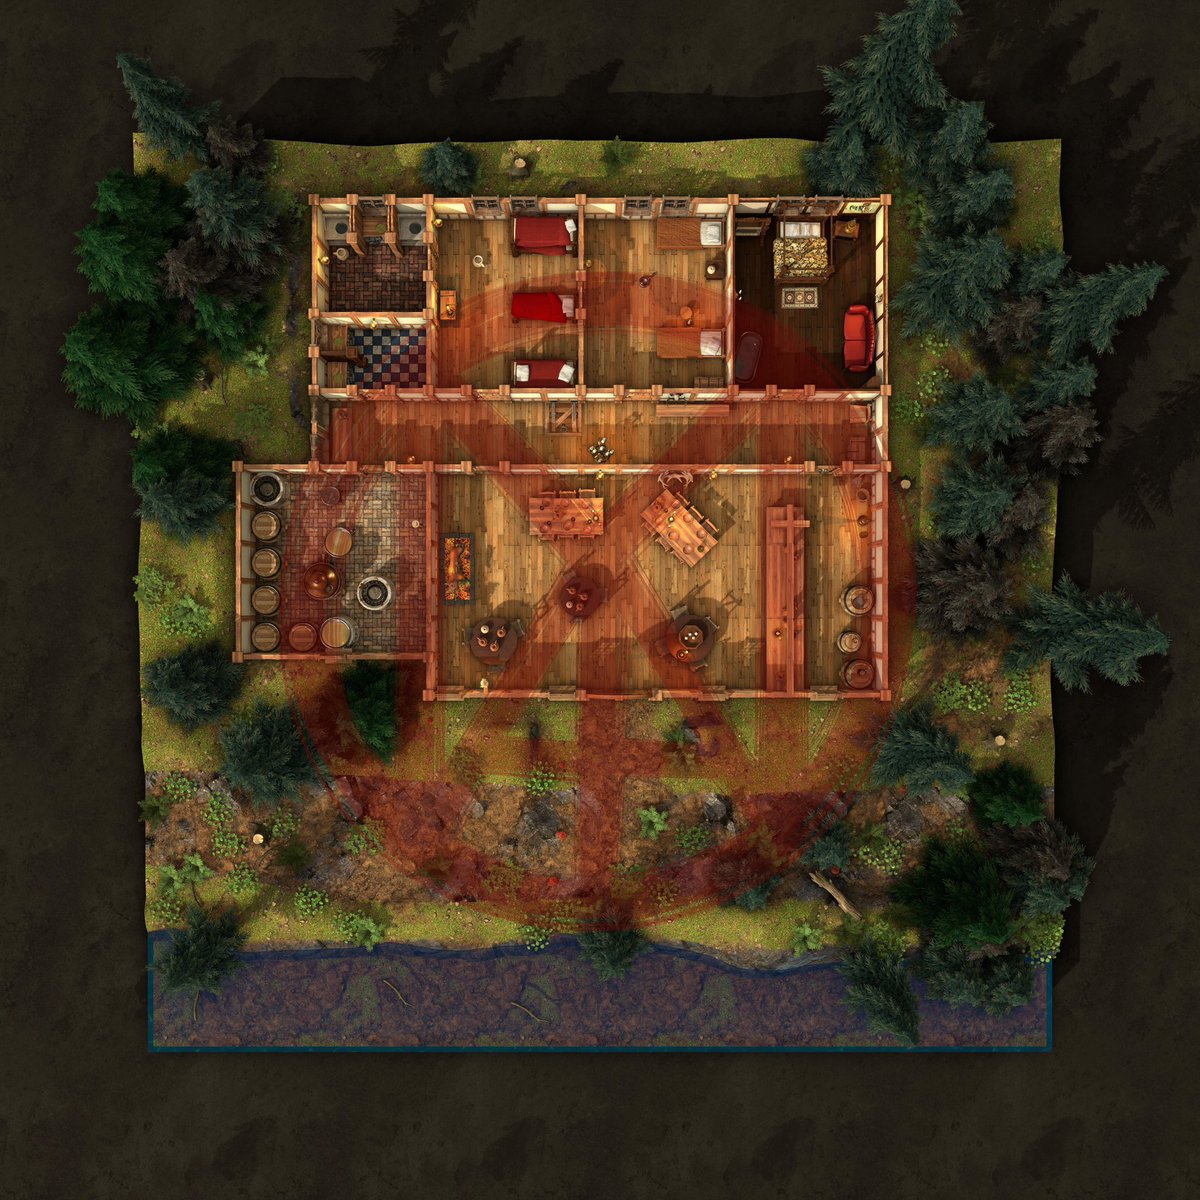 A little tavern/inn I
made on Dungeon Alchemist
Fancy a beverage?

#mapbuilding #worldbuilding #dungeonalchemist  #dnd #dnd5e #dungeonsanddragons #dungeonsanddragonsart #battlemap #battlemaps #fantasyworld #tabletopgamer #mapmakers